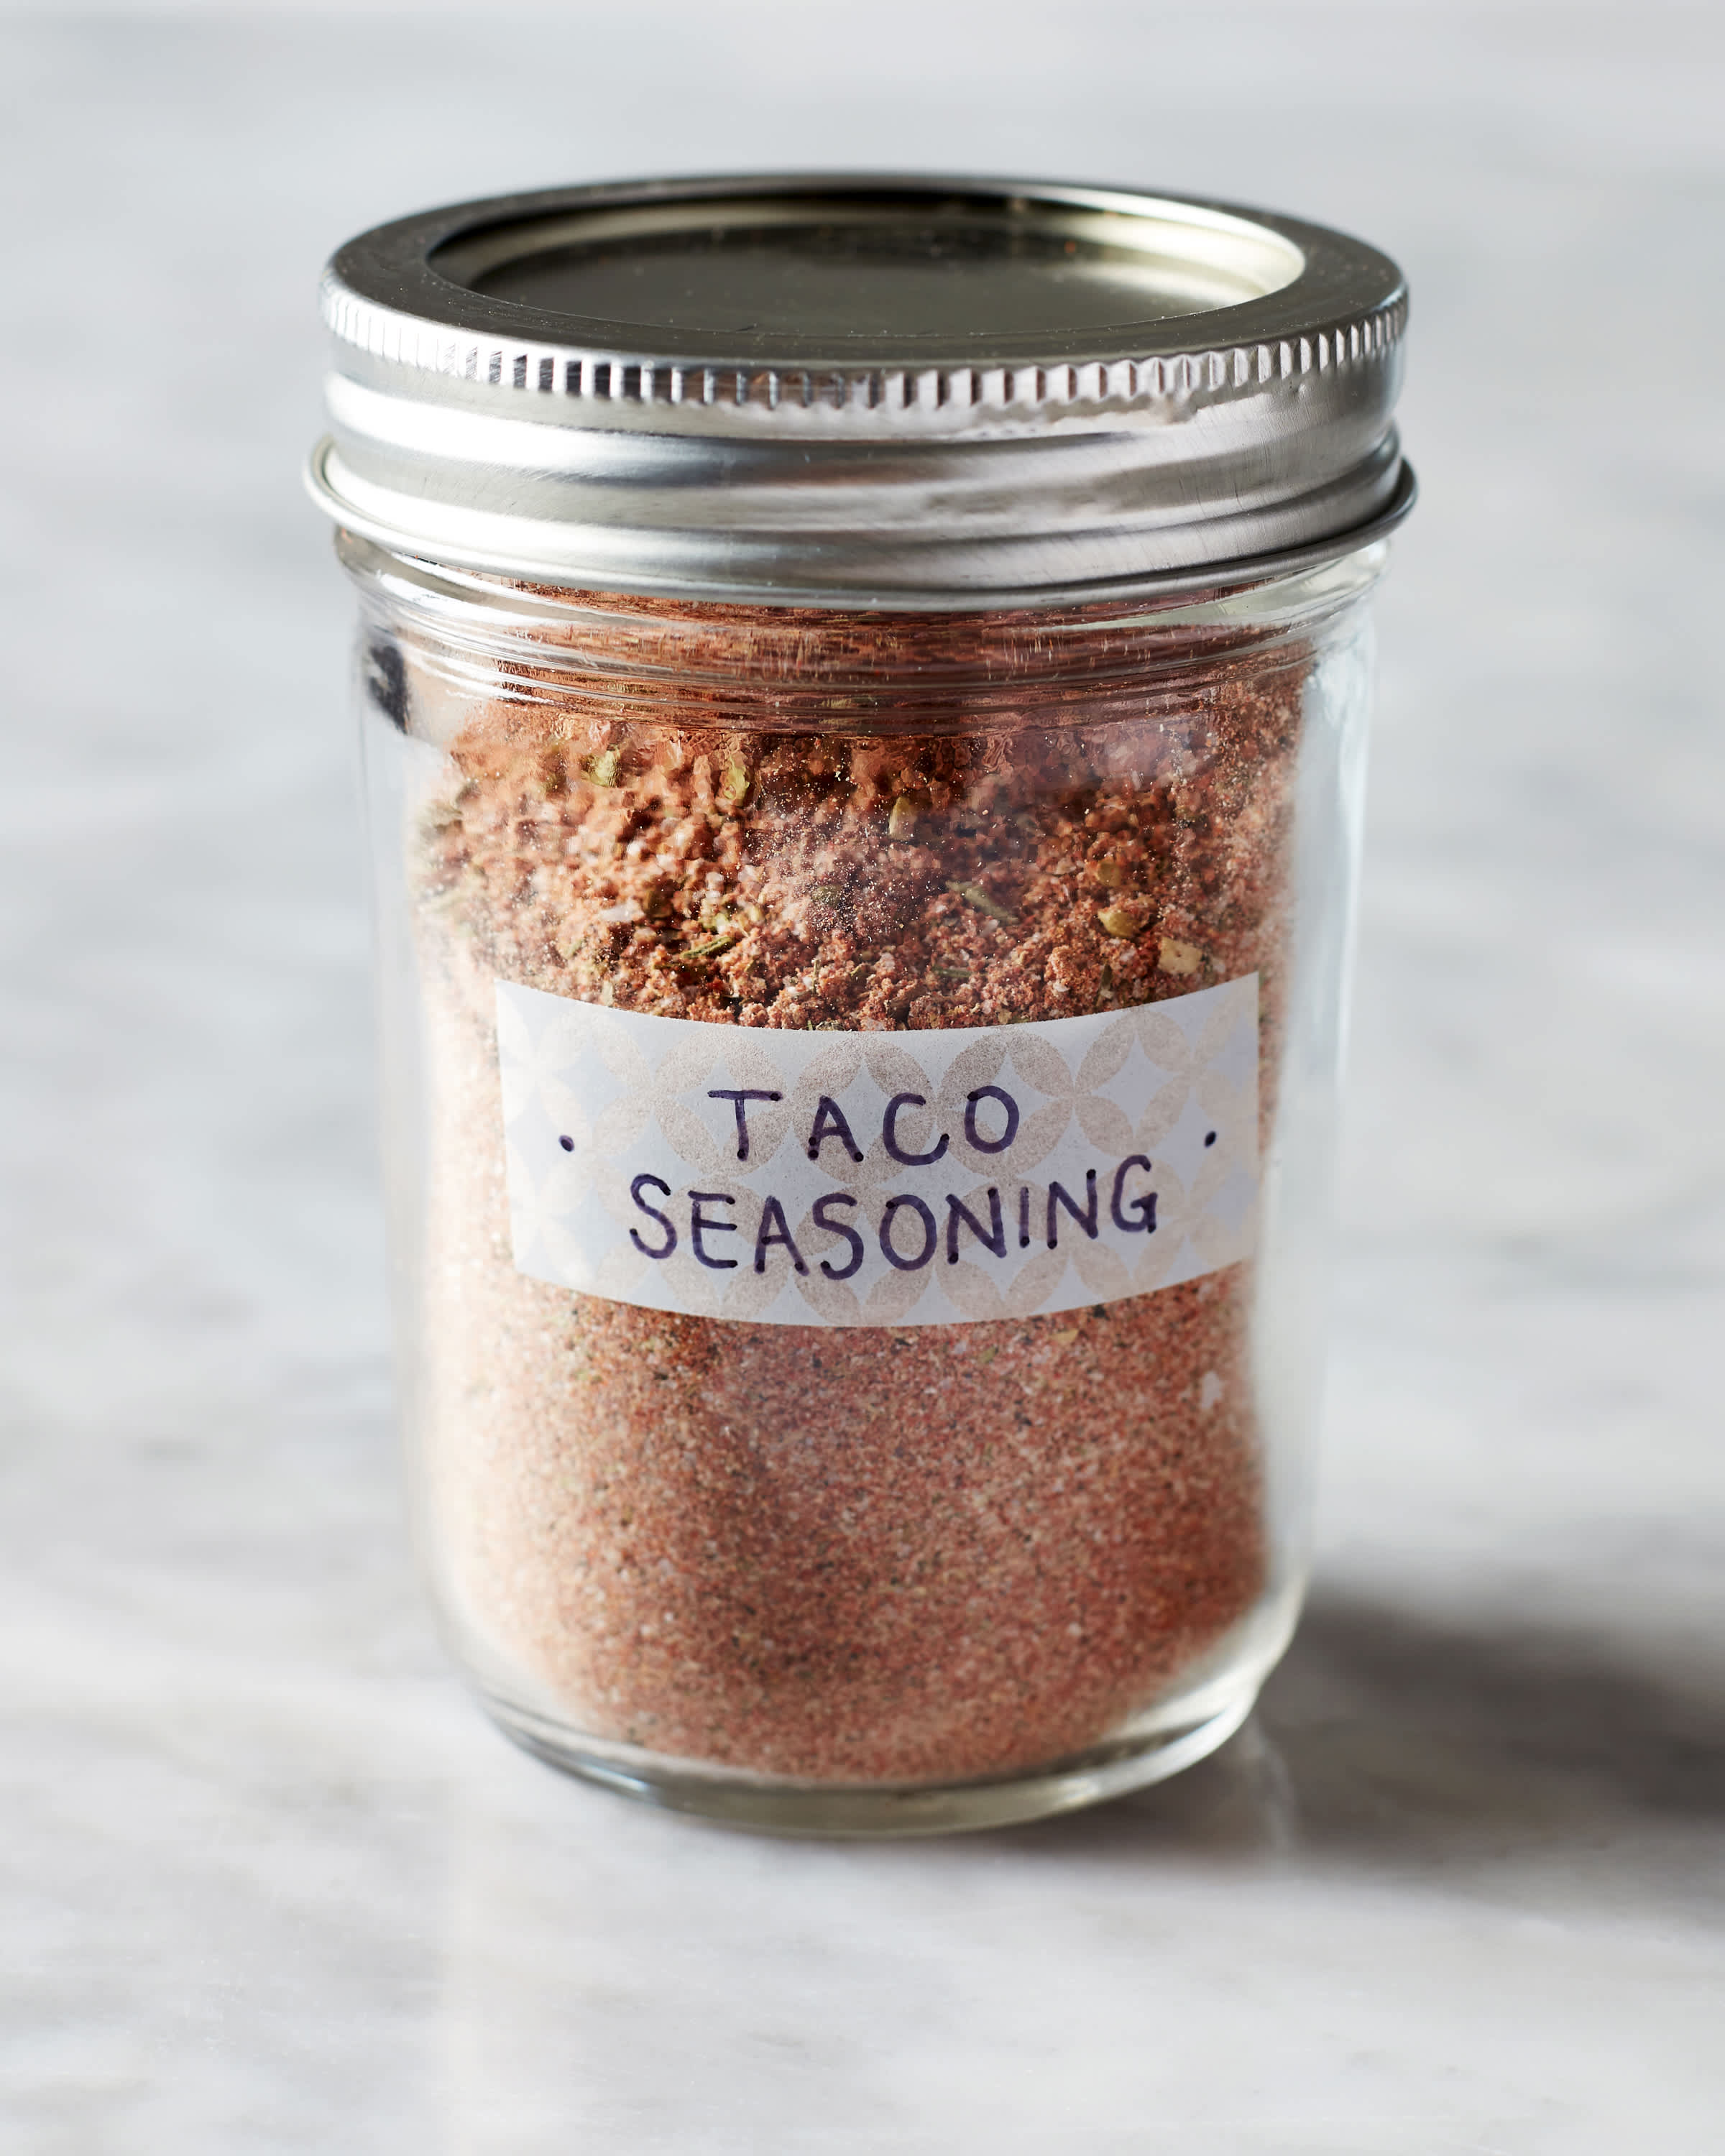 https://cdn.apartmenttherapy.info/image/upload/v1585314964/k/Photo/Recipes/2020-04-how-to-make-taco-seasoning/2020_howto_taco_seasoning_lead2_094.jpg